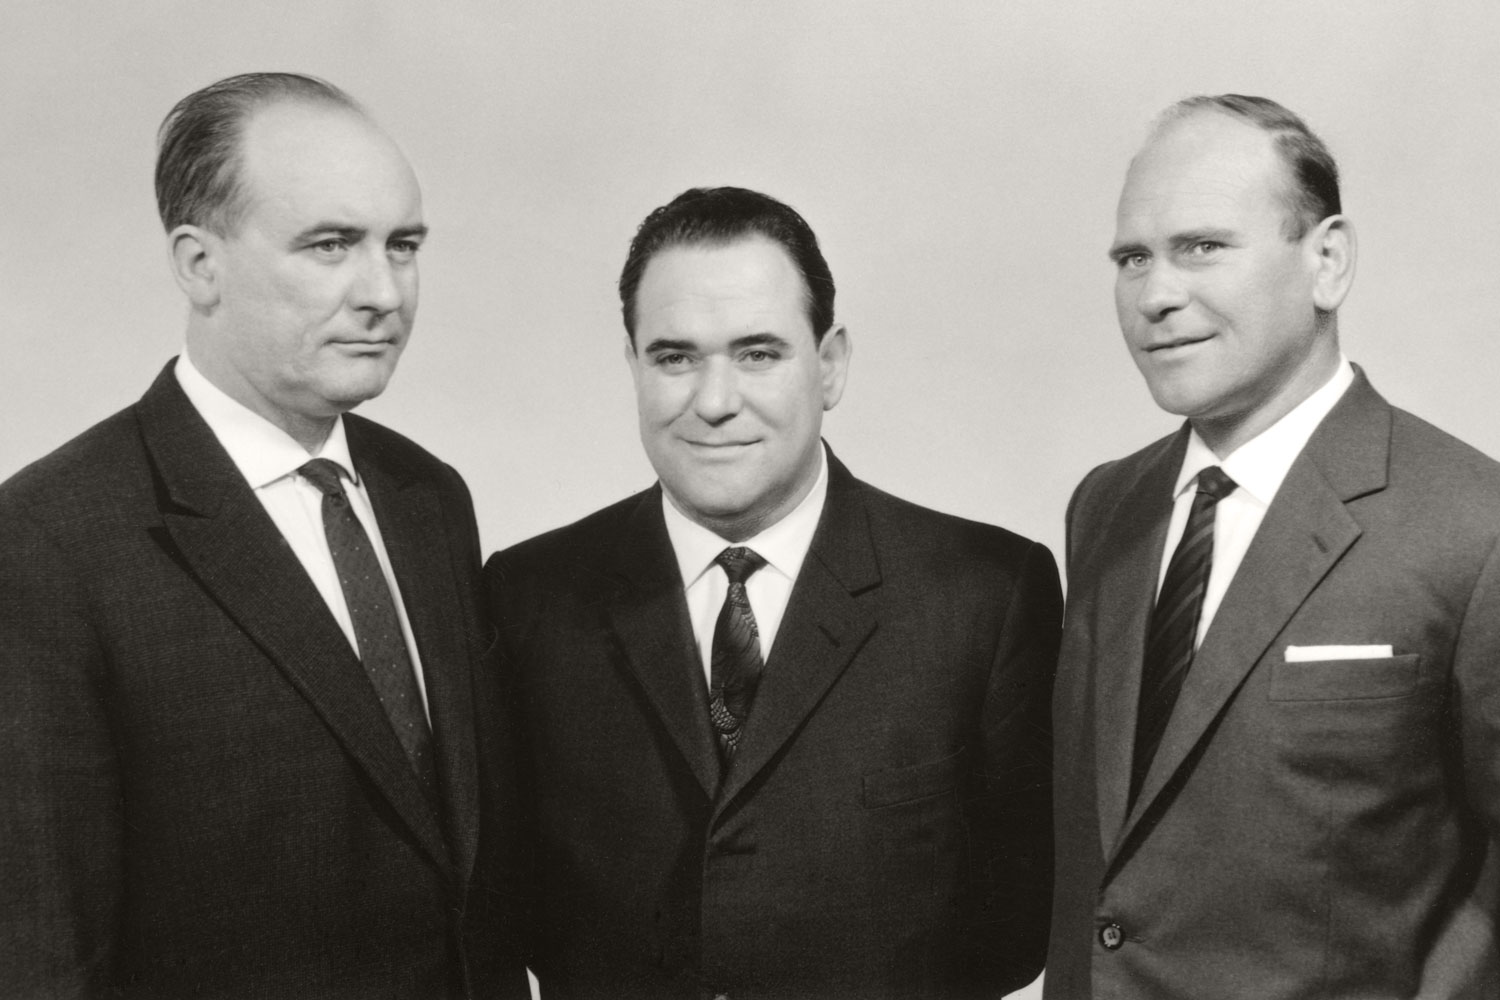 Sociable, thrifty and athletic: Alois, Hans and Heinz Pöttinger.